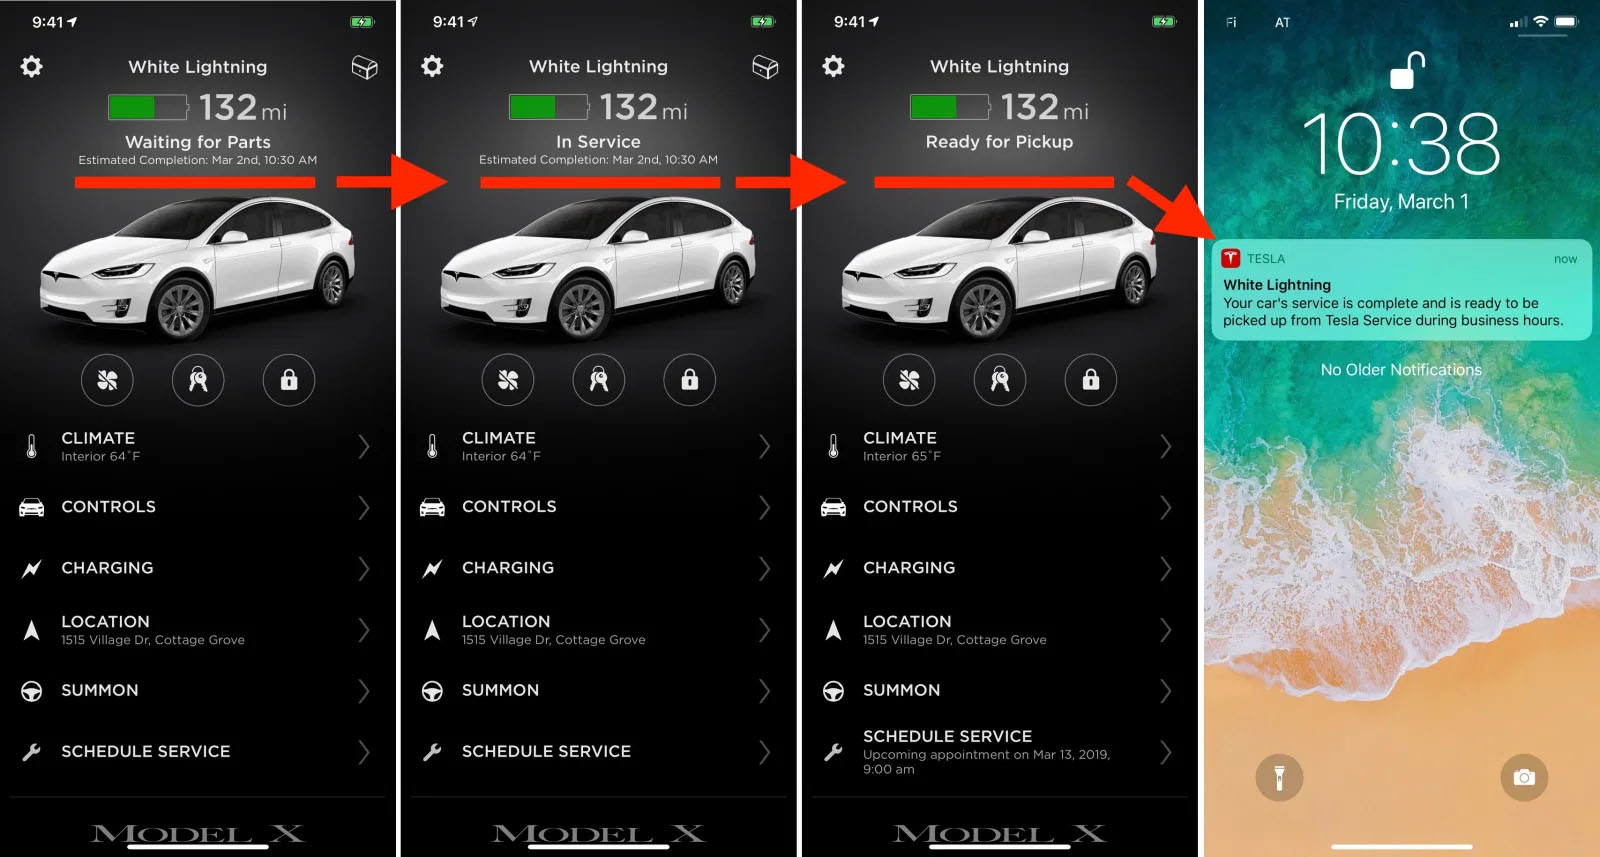 Tesla service via Mobile app. Photo source: Electrek.